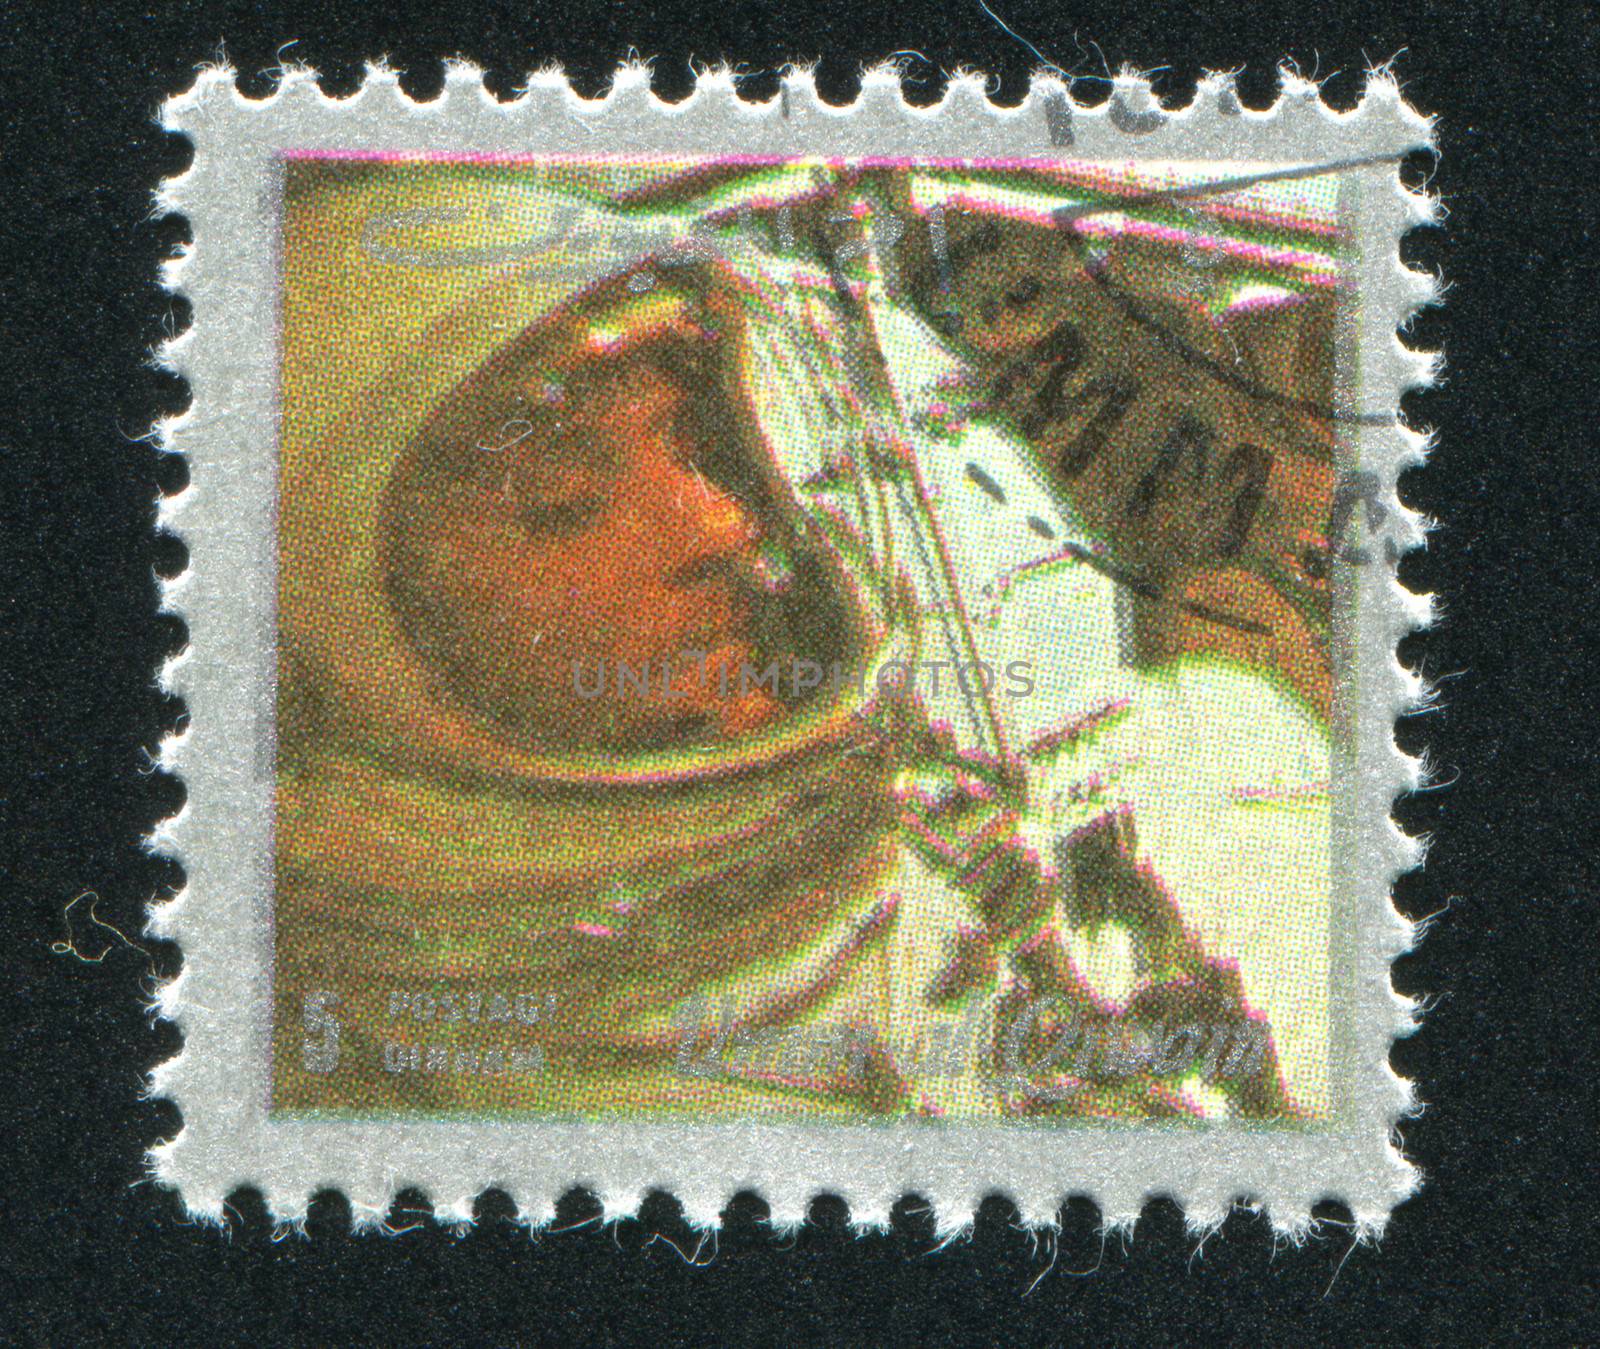 UMM AL-QUWAIN - CIRCA 1972: stamp printed by Umm al-Quwain, shows Wally Schirra, circa 1972